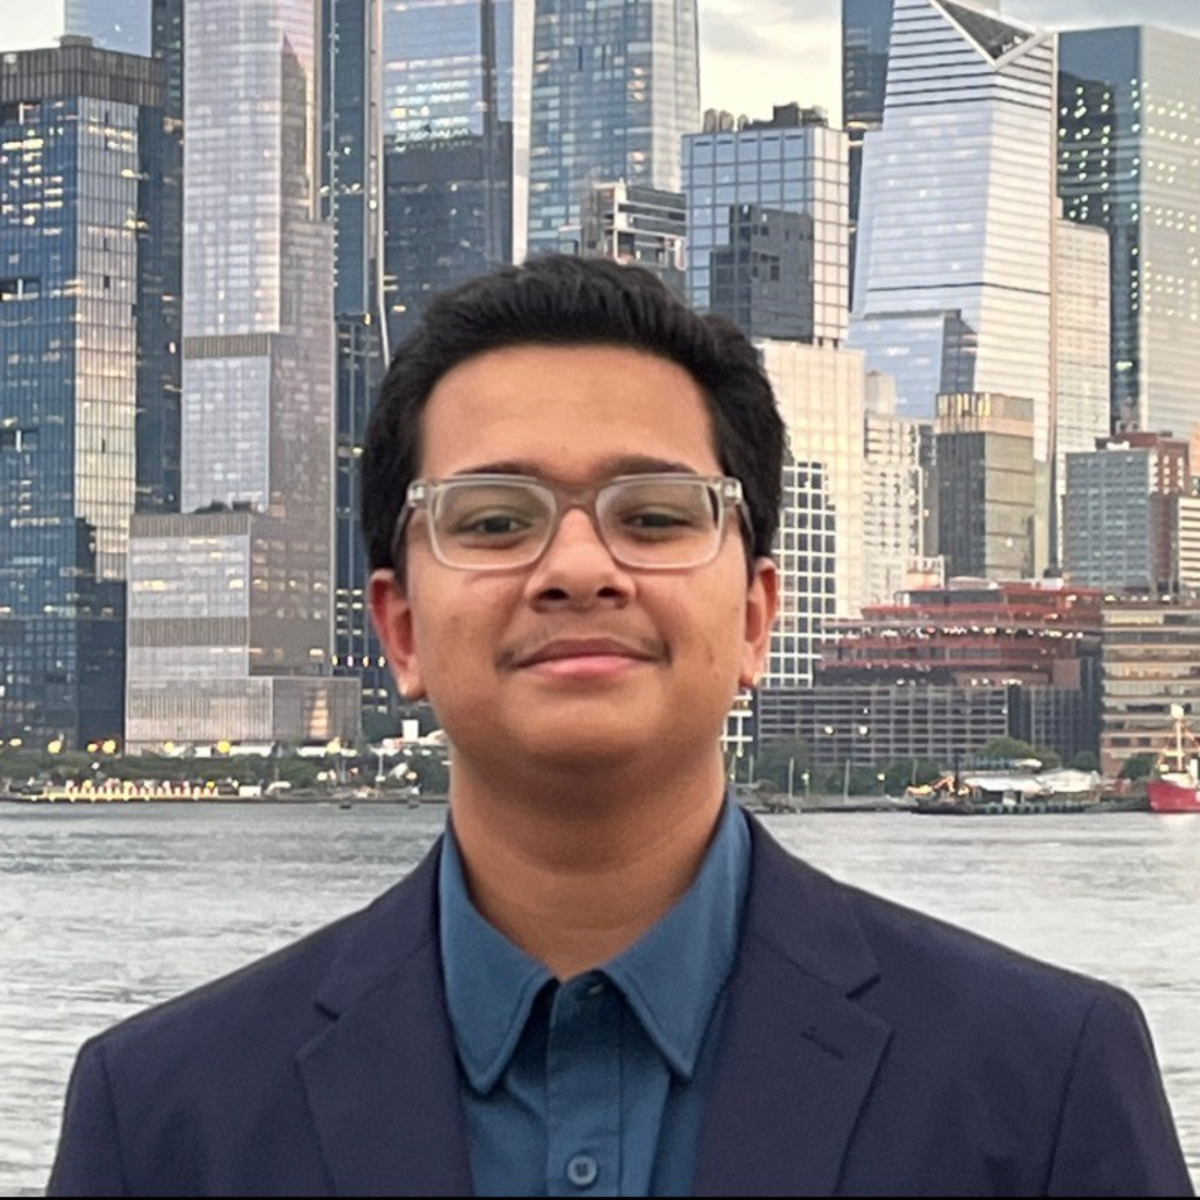 Aditya Velamuri with the New York City skyline in the background.